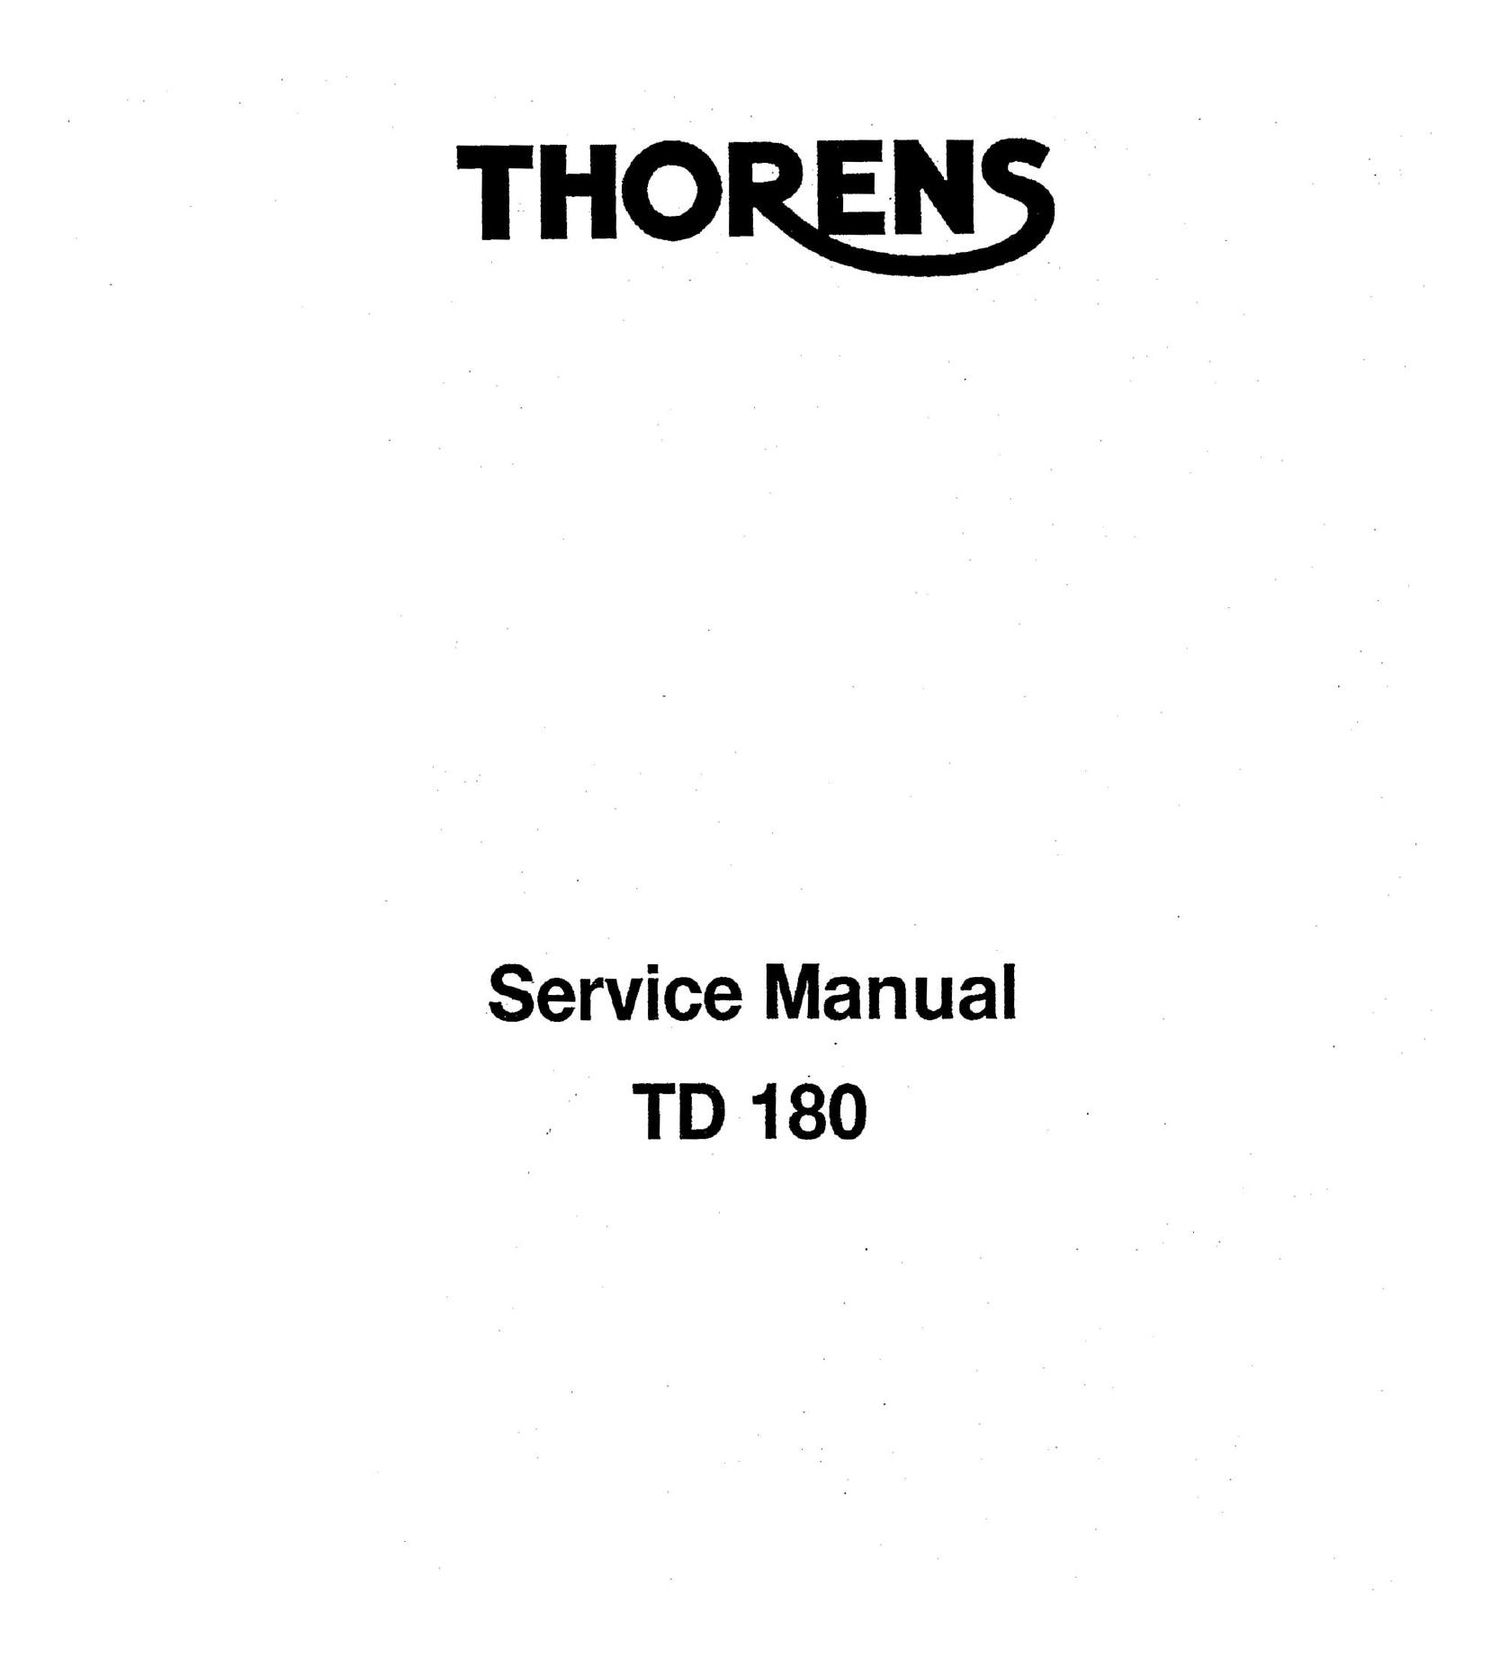 thorens td 180 service manual